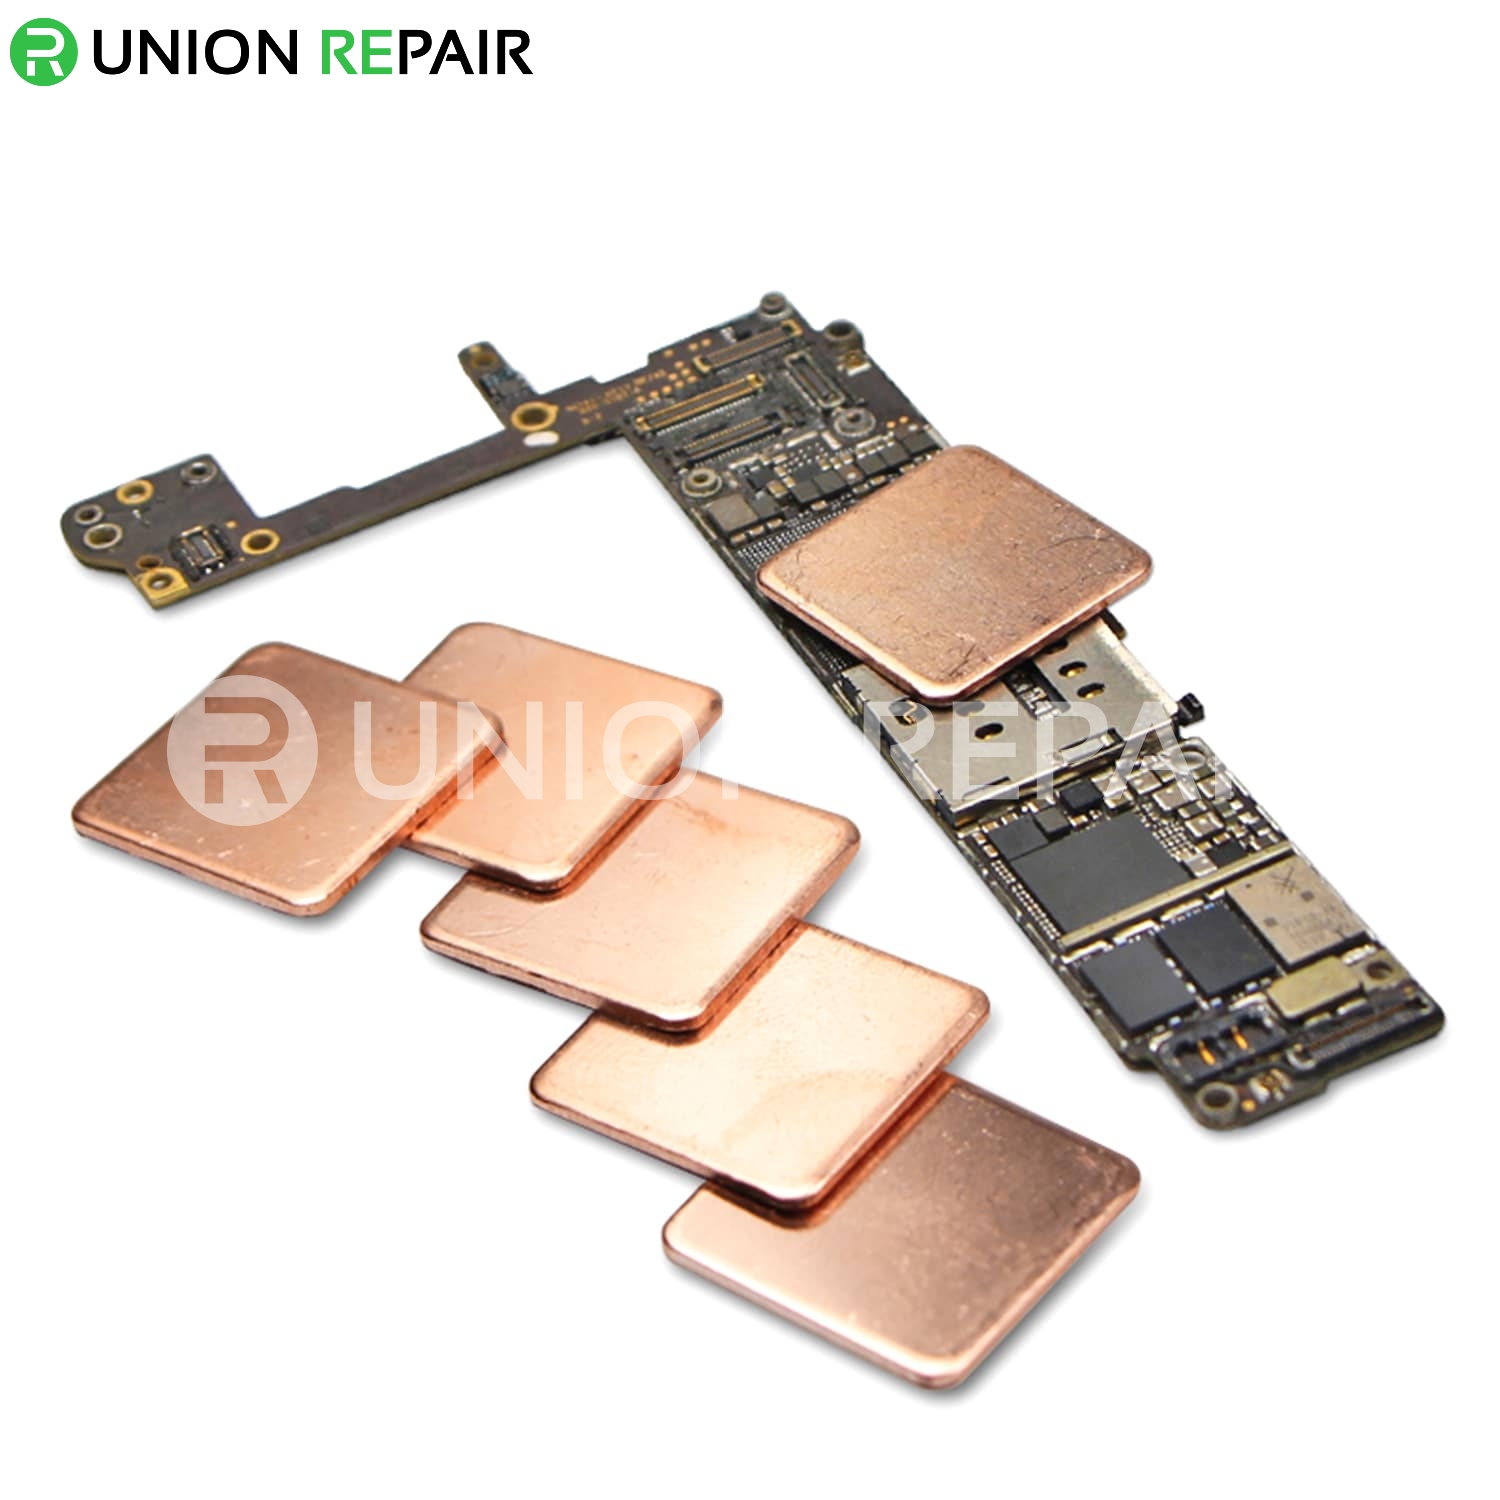 Copper Slice Radiator for Phone Repair Chip Cooling (10pcs/set)